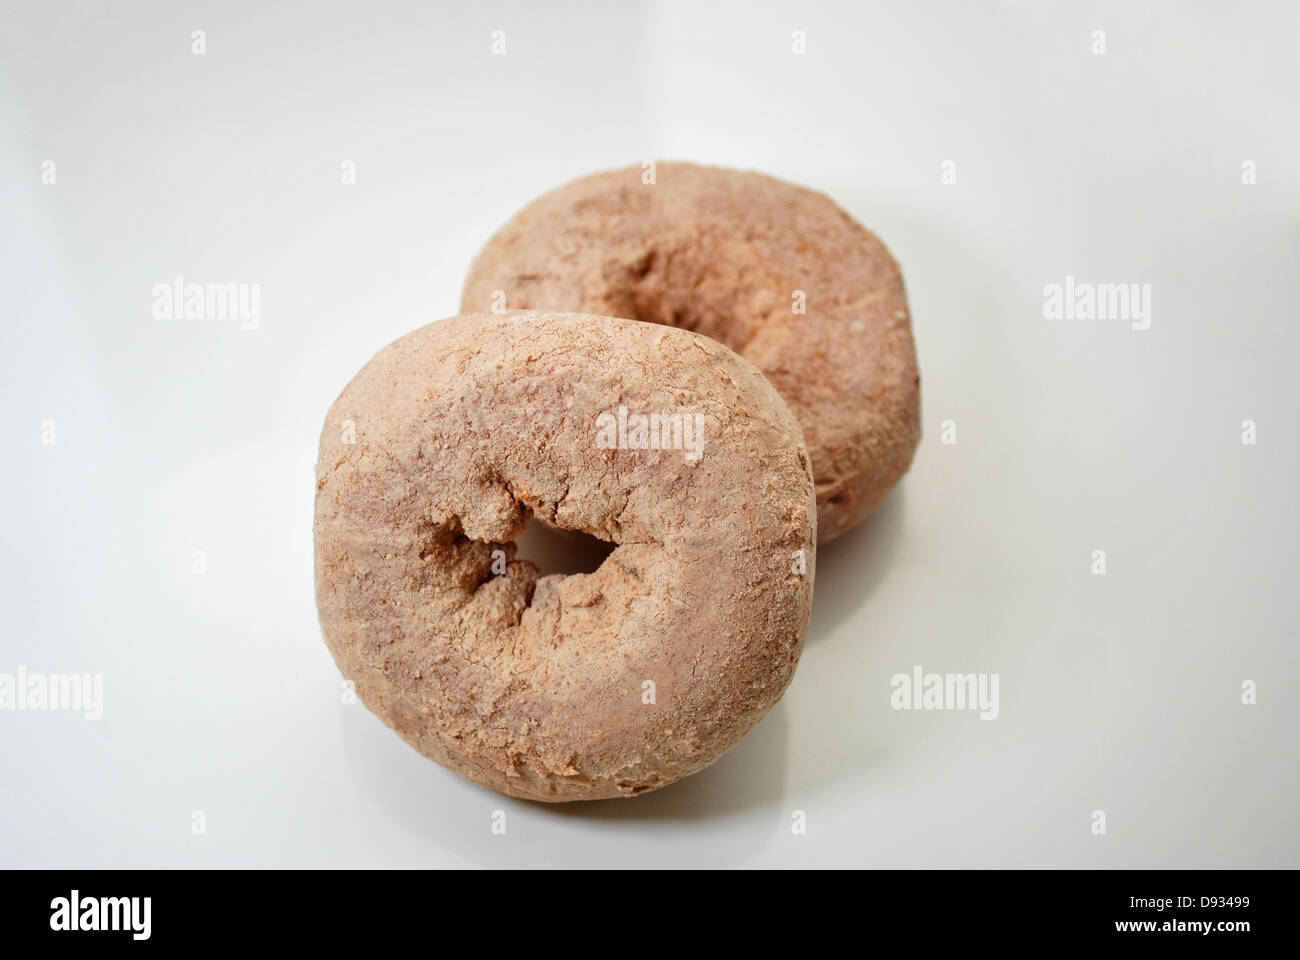 Two Cinnamon Covered Doughnuts Stock Photo